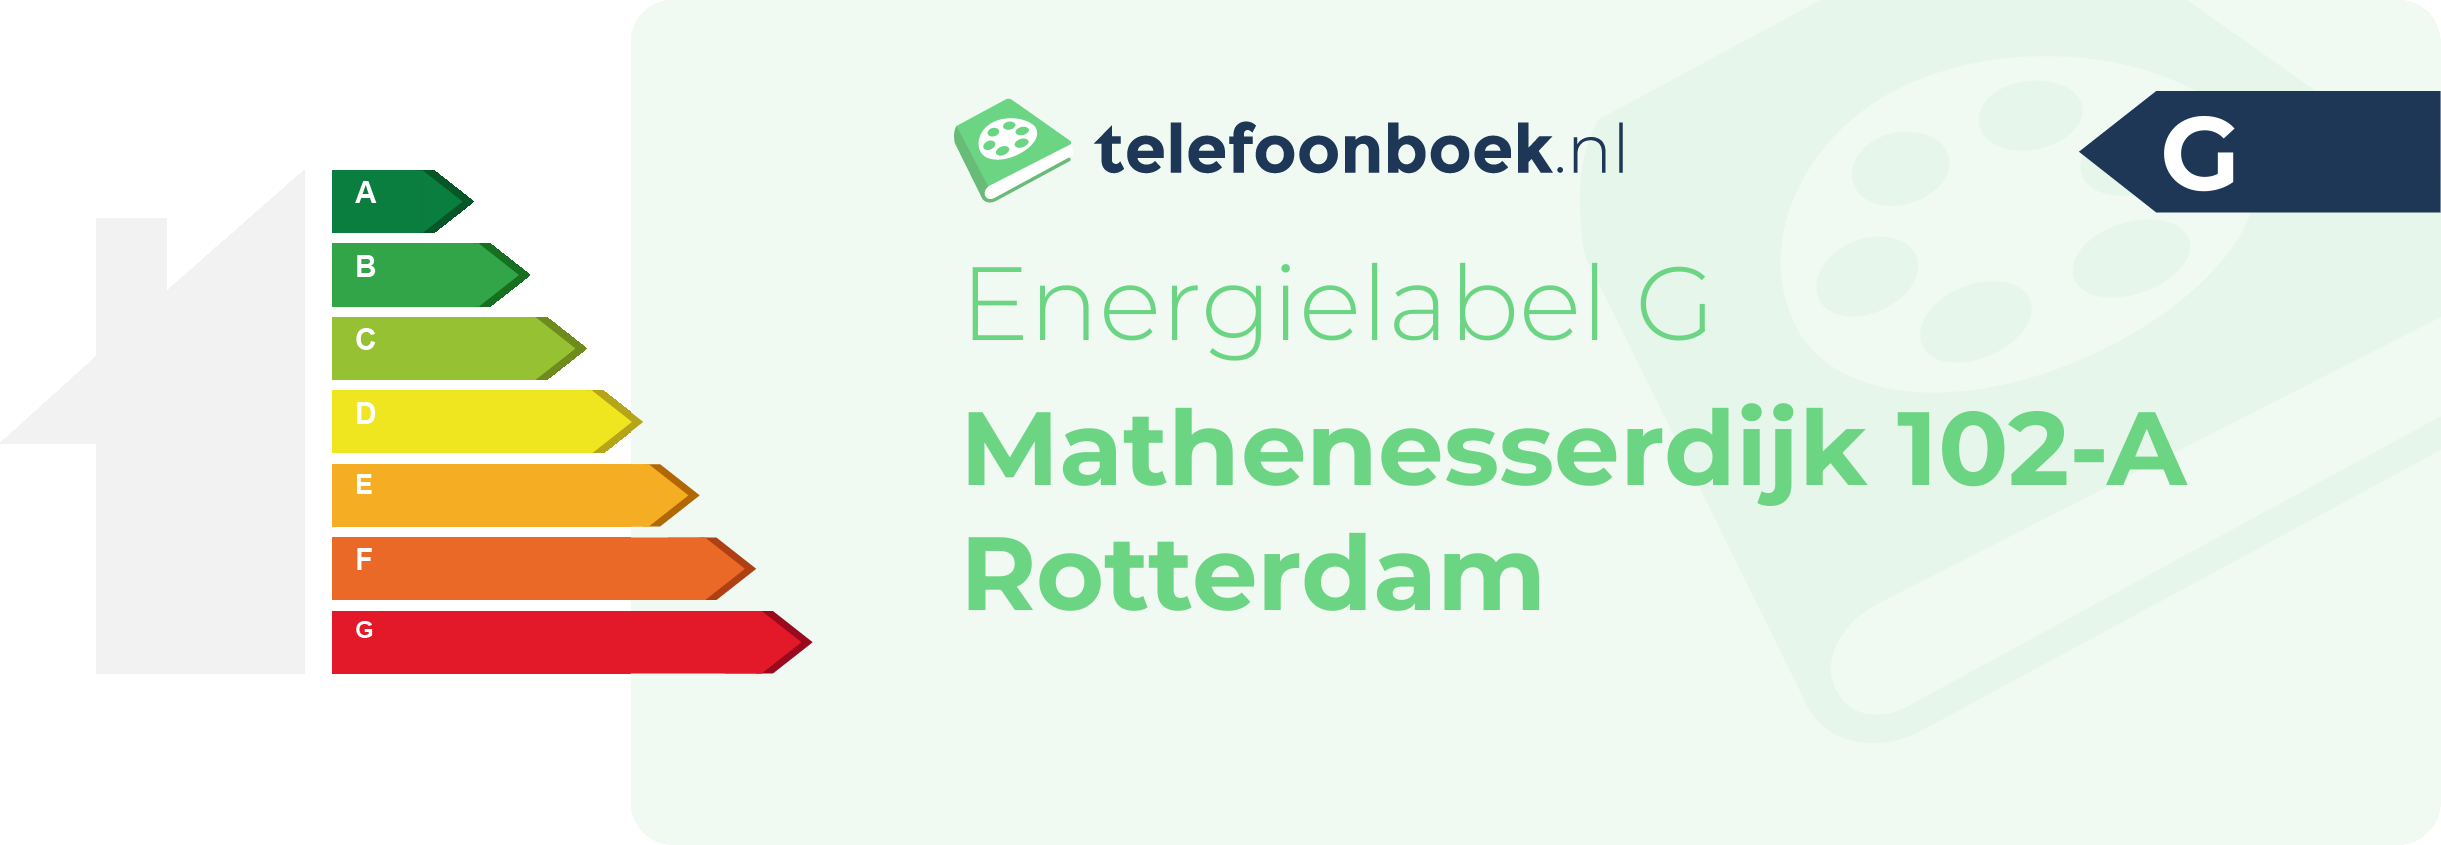 Energielabel Mathenesserdijk 102-A Rotterdam